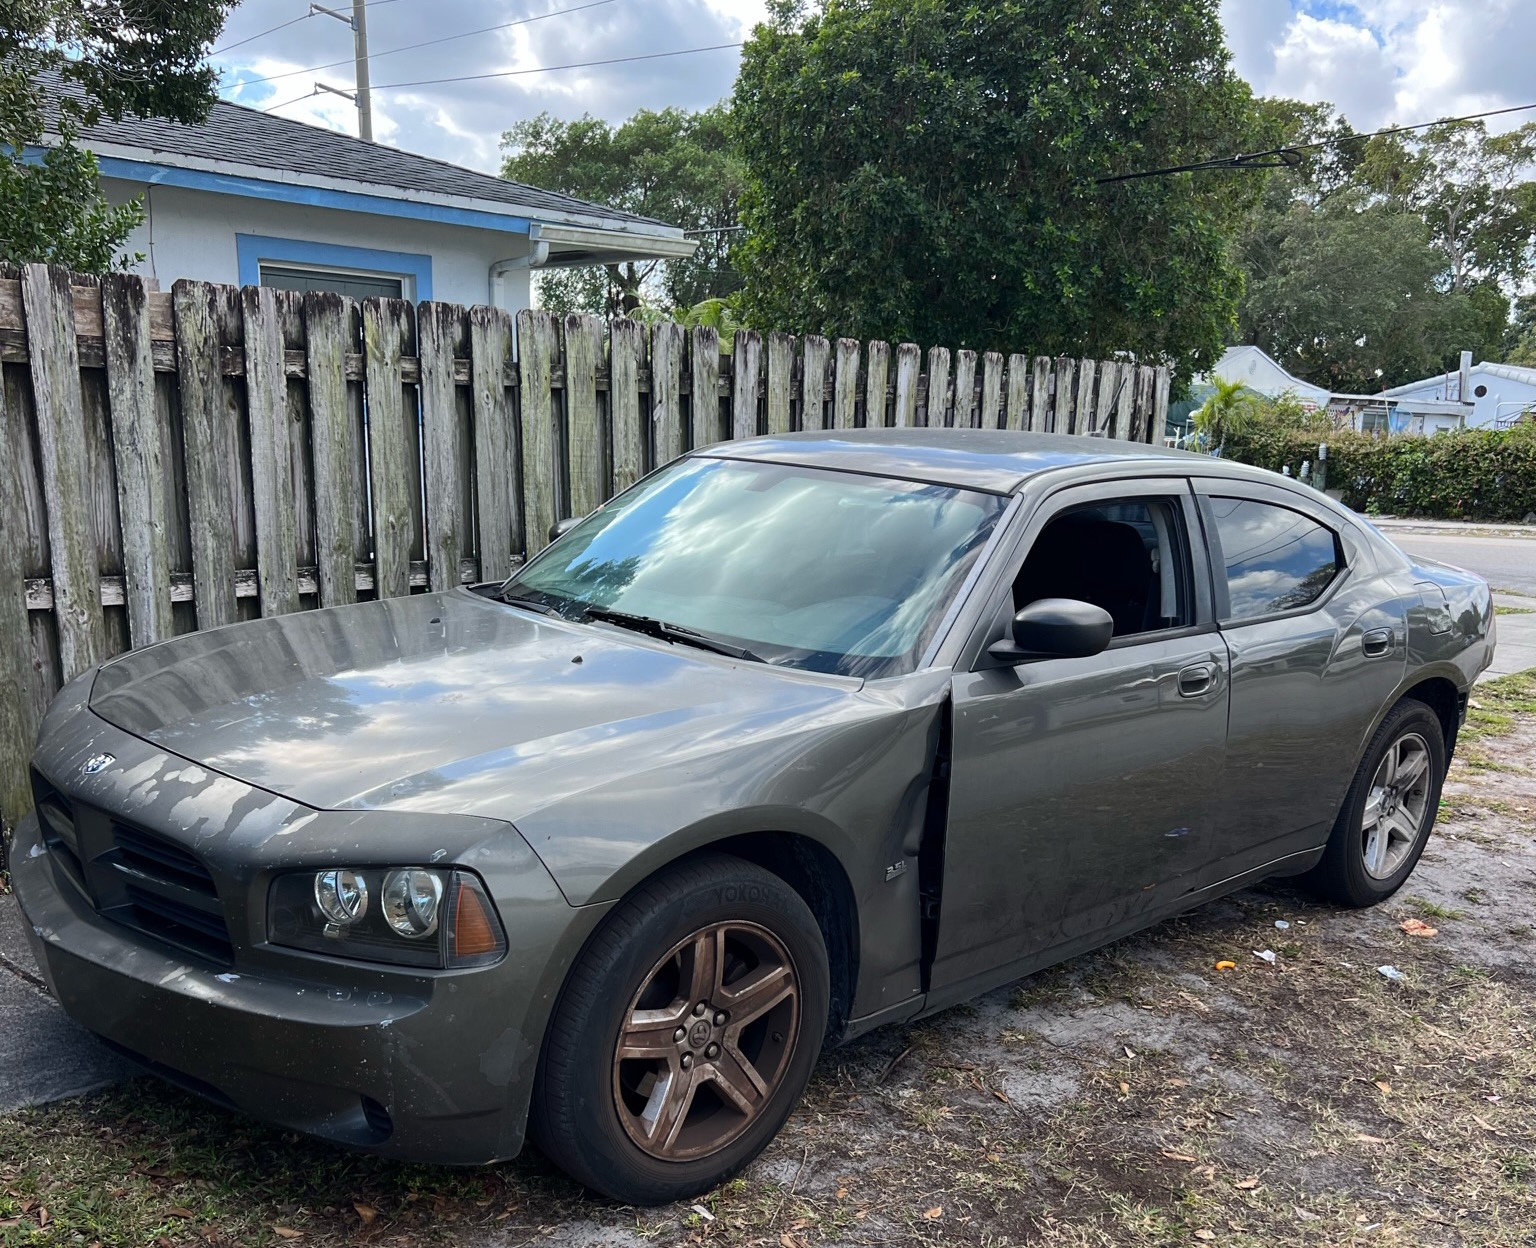 Cash for junk cars service in Plantation, FL